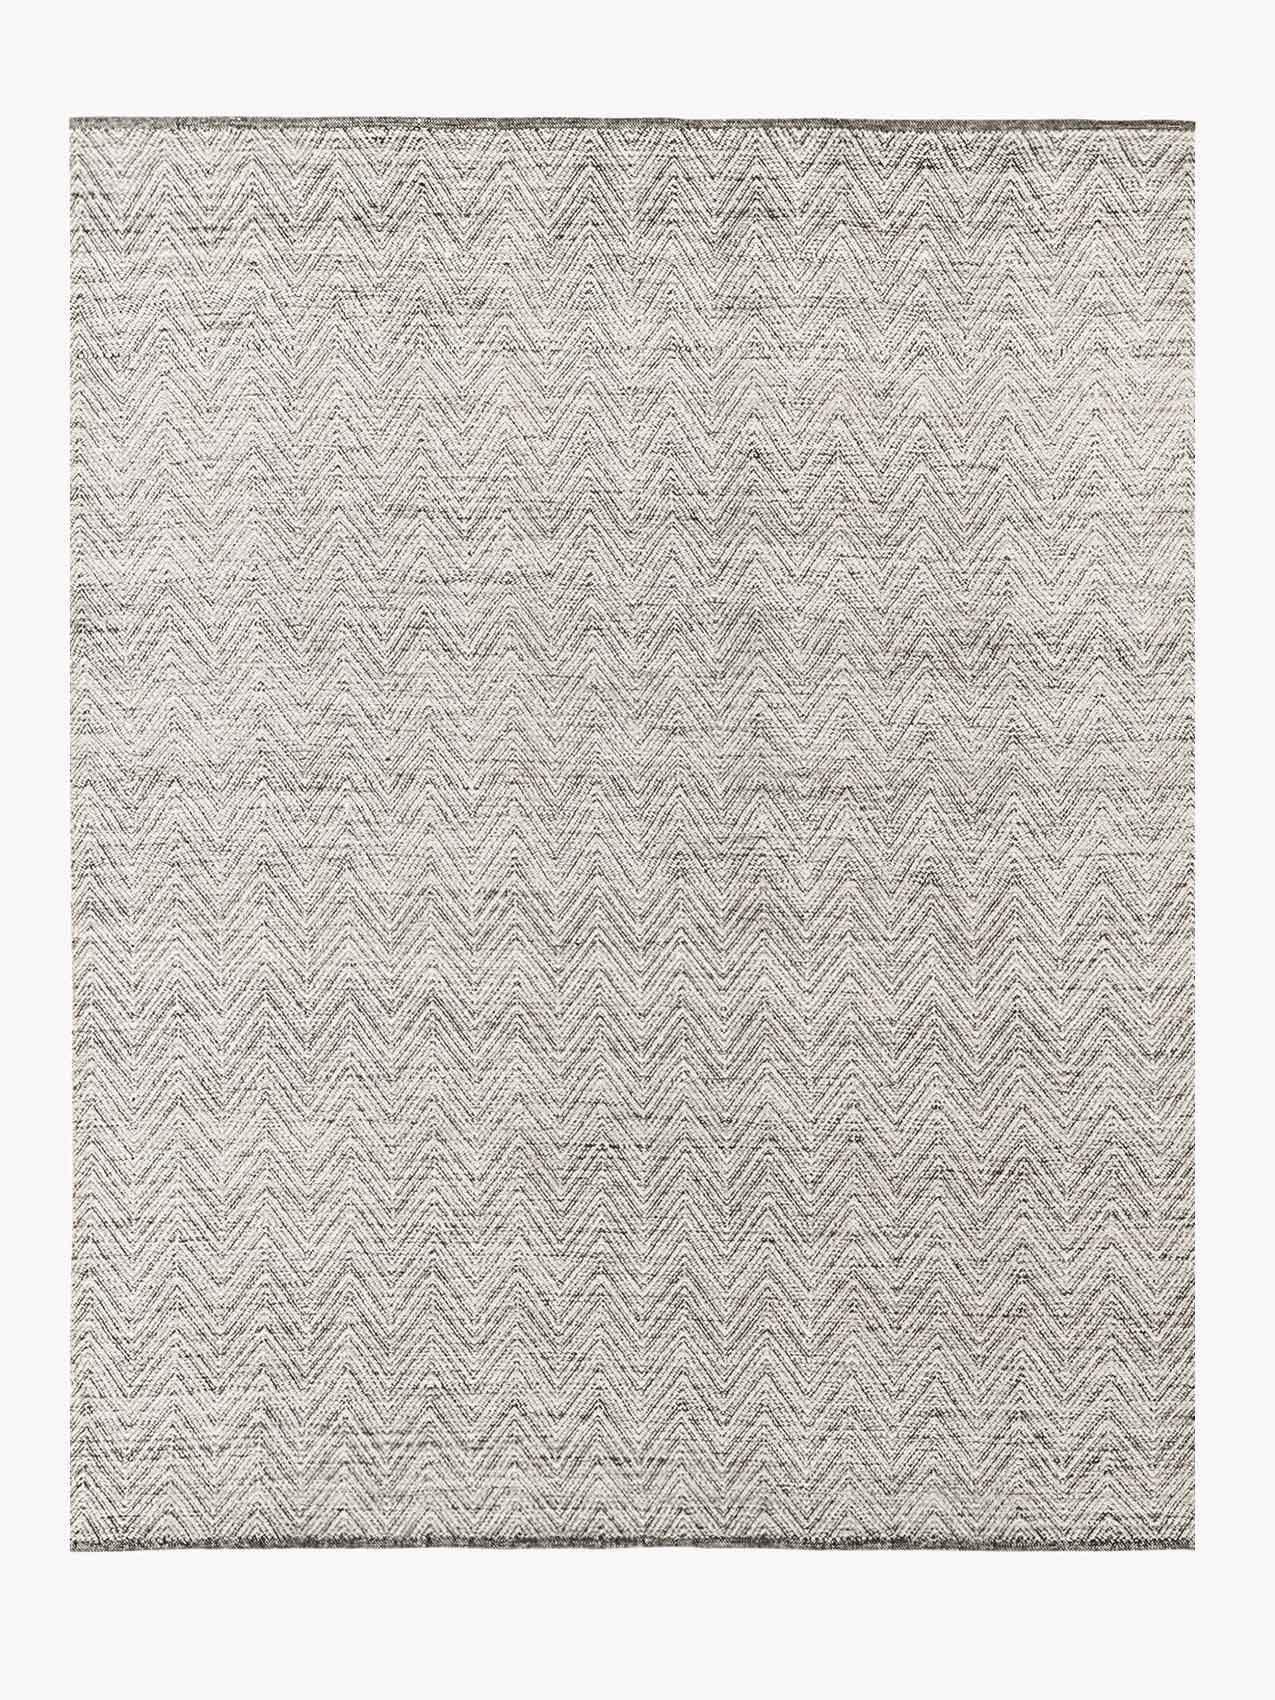 For Sale: Silver Ben Soleimani Ceyah Rug– Hand-woven Plush Textured Wool + Linen Charcoal 9'x12'